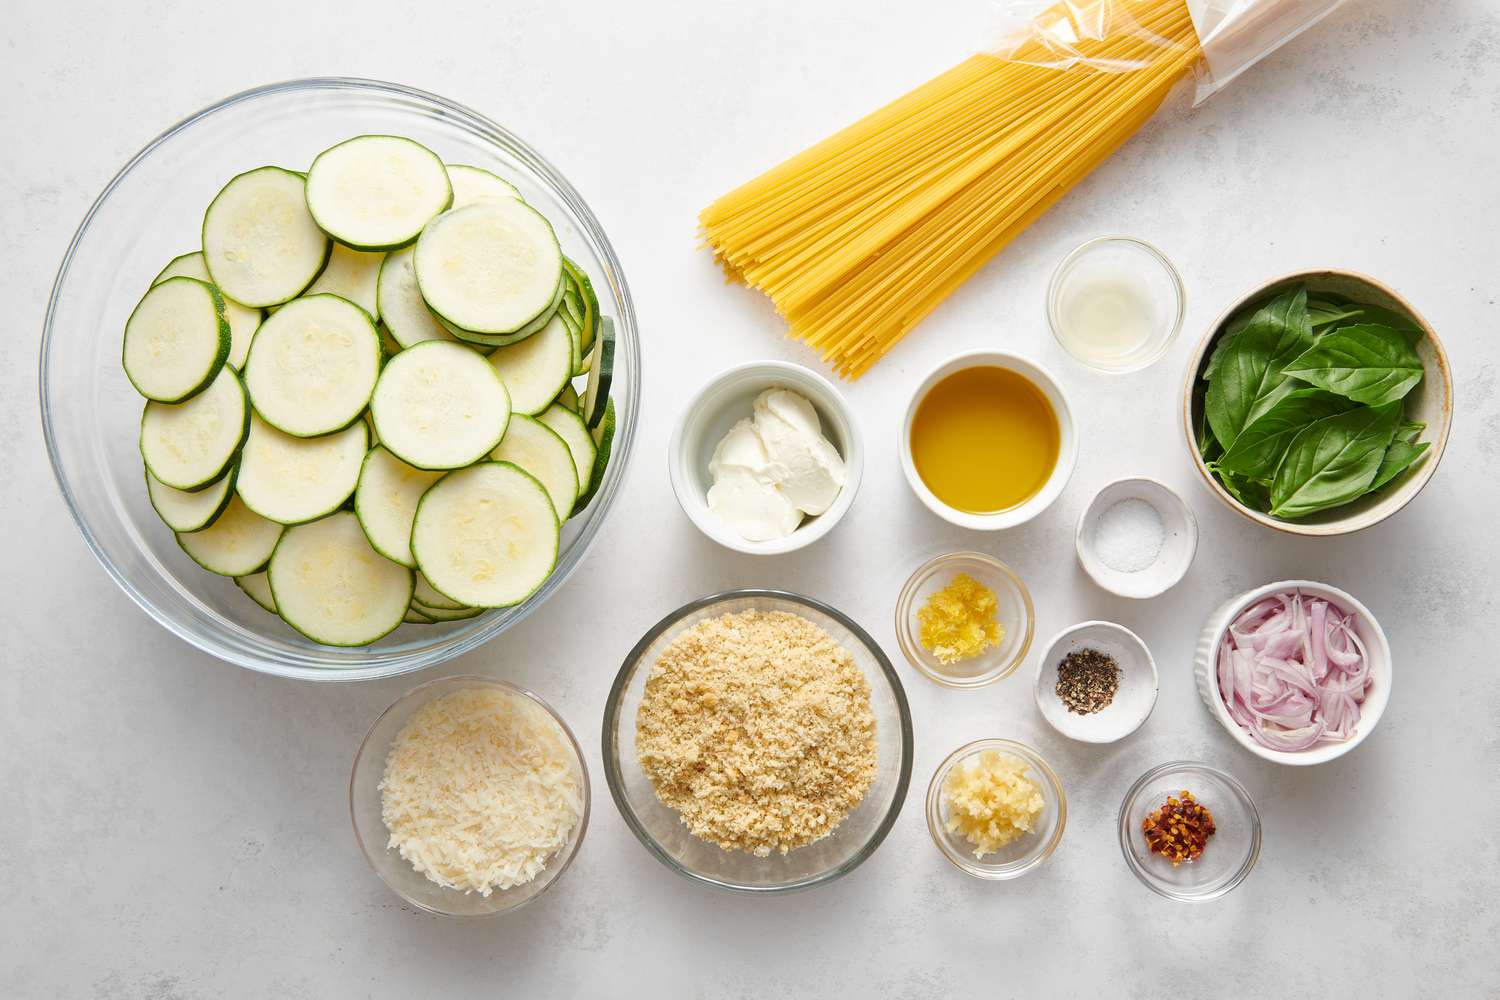 Ingredients to make caramelized zucchini pasta